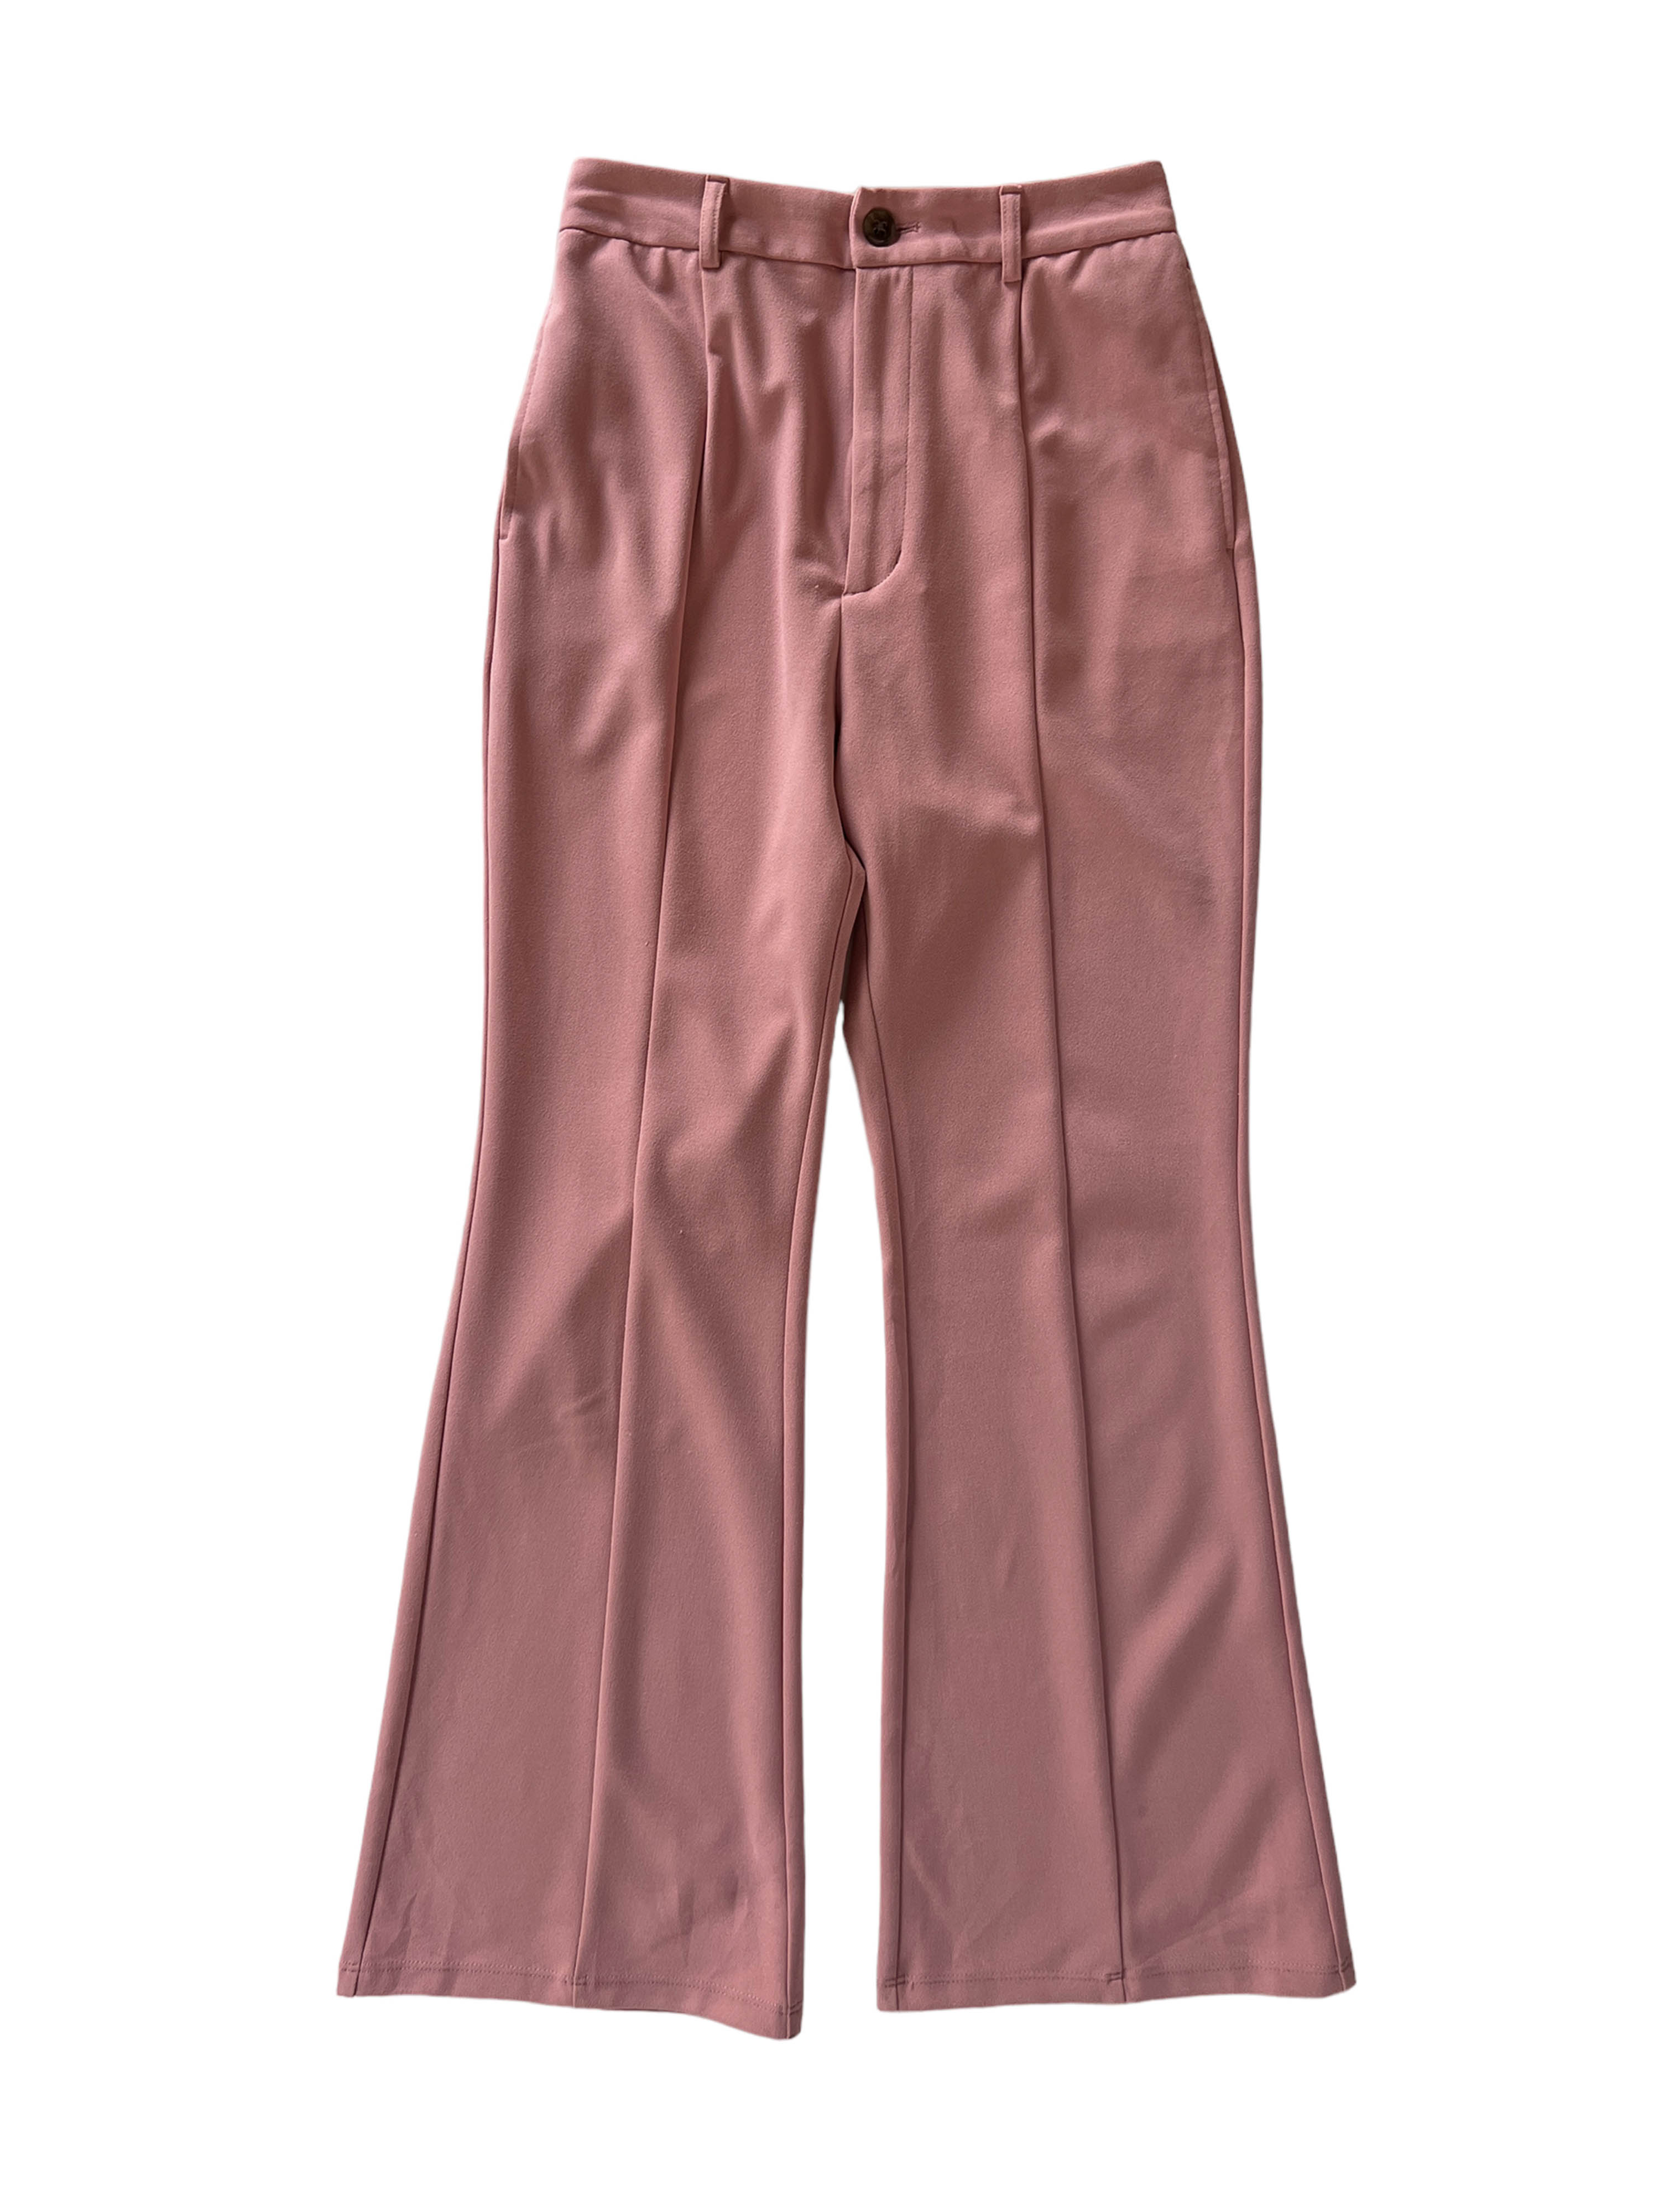 GU pink pants